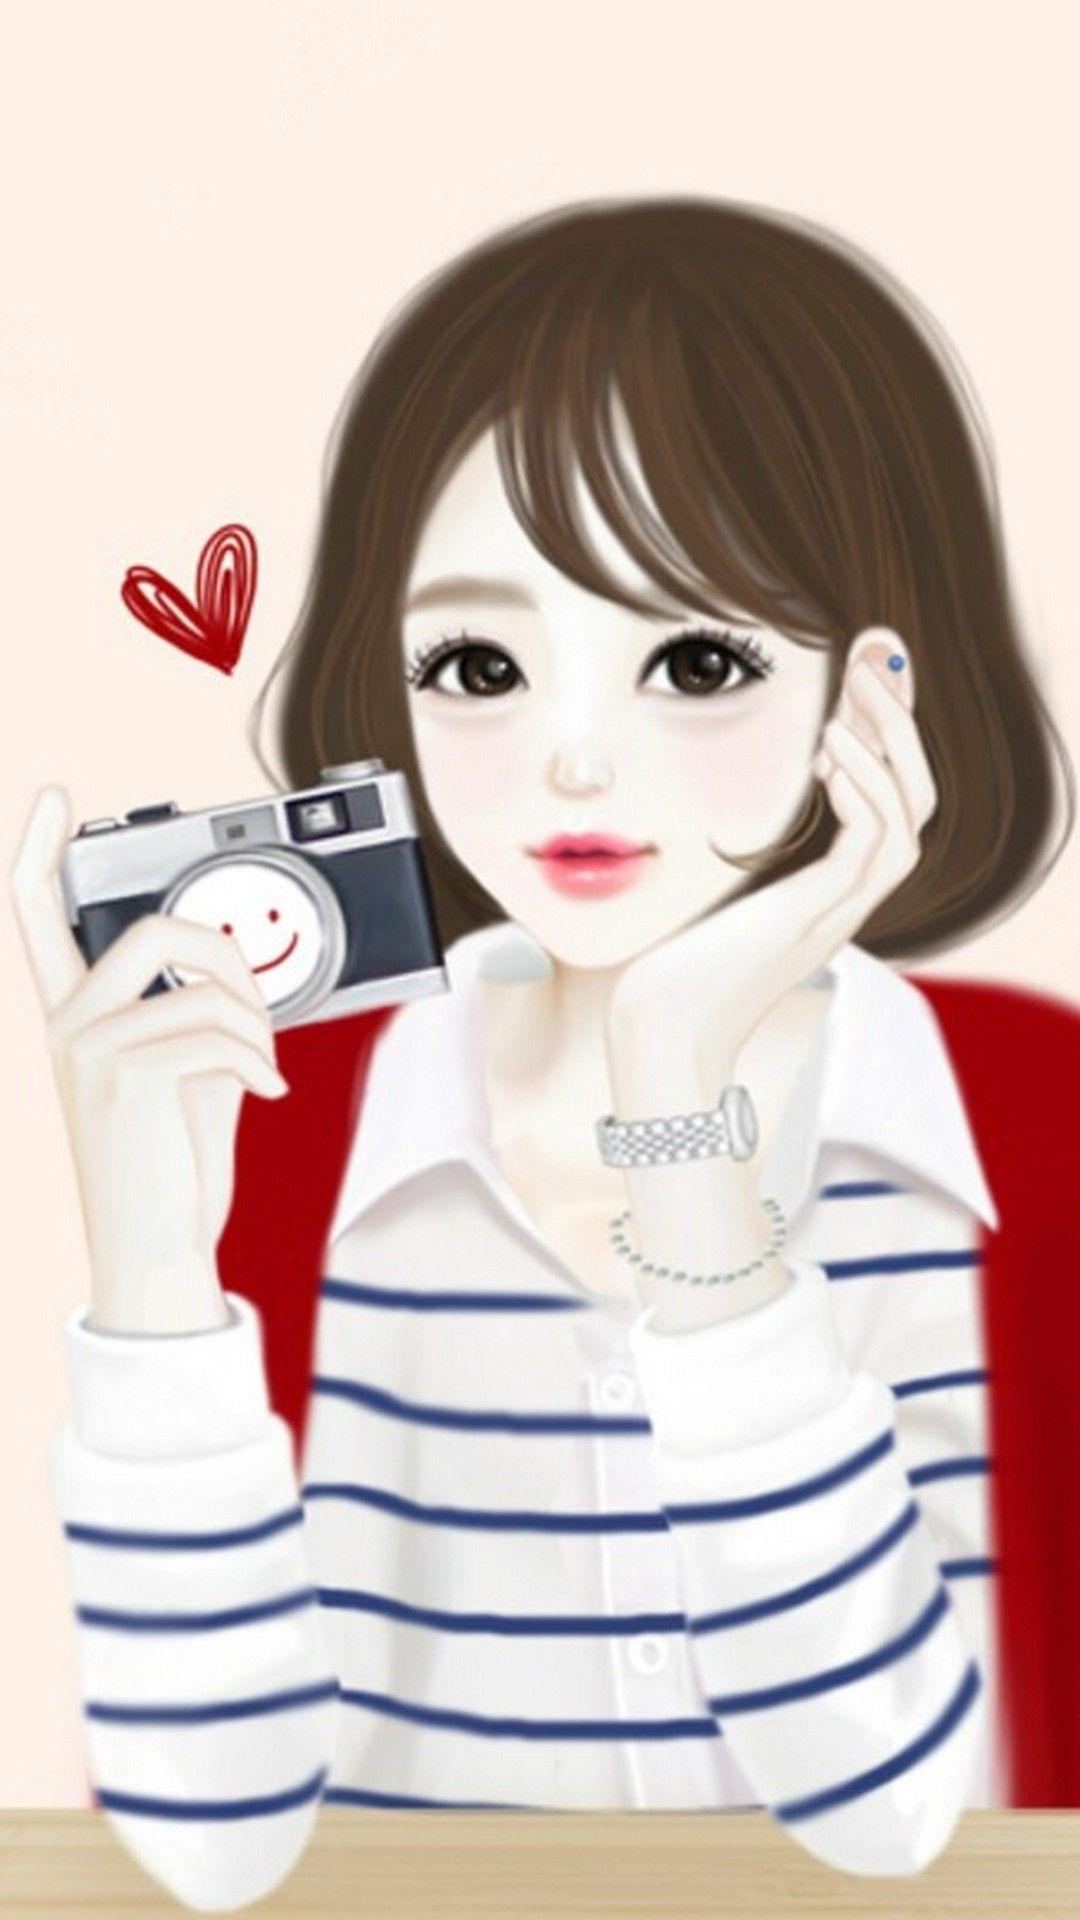 Cute Drawings Wallpaper For Phone HD Phone Wallpaper. Cute girl wallpaper, Korean anime, Cute drawings